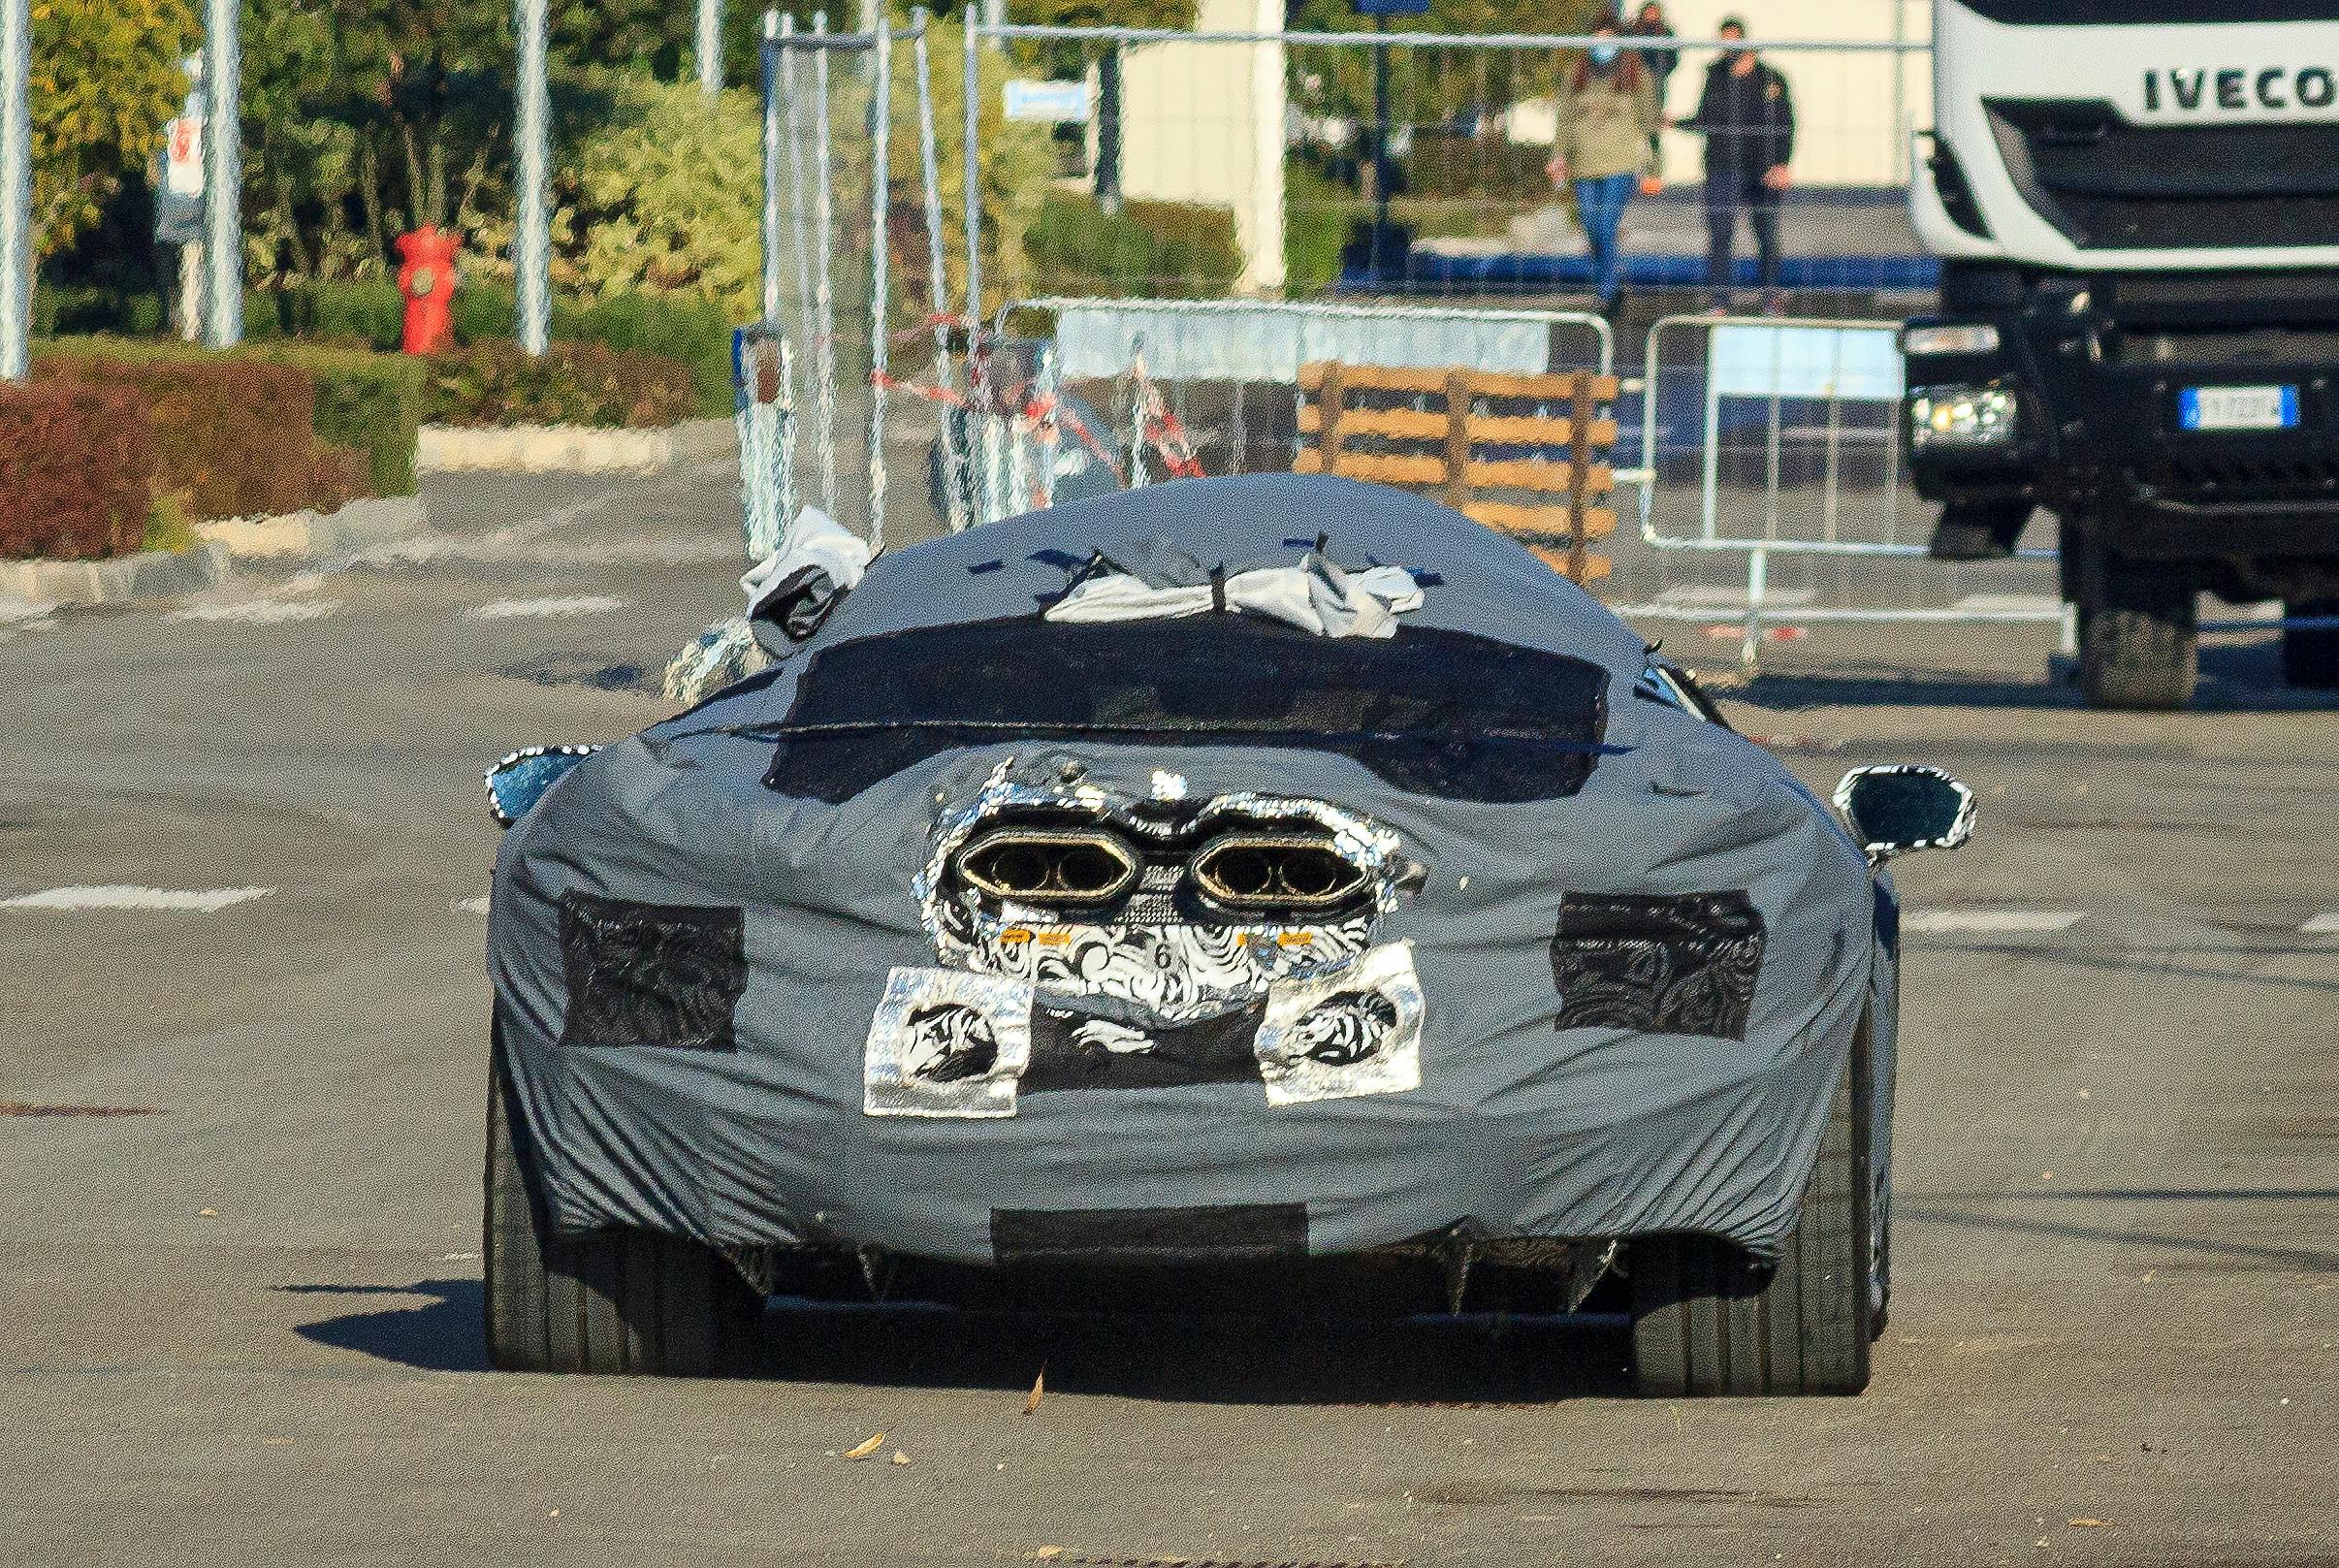 Lamborghini Aventador successor rear end central high-mounted exhaust outlets